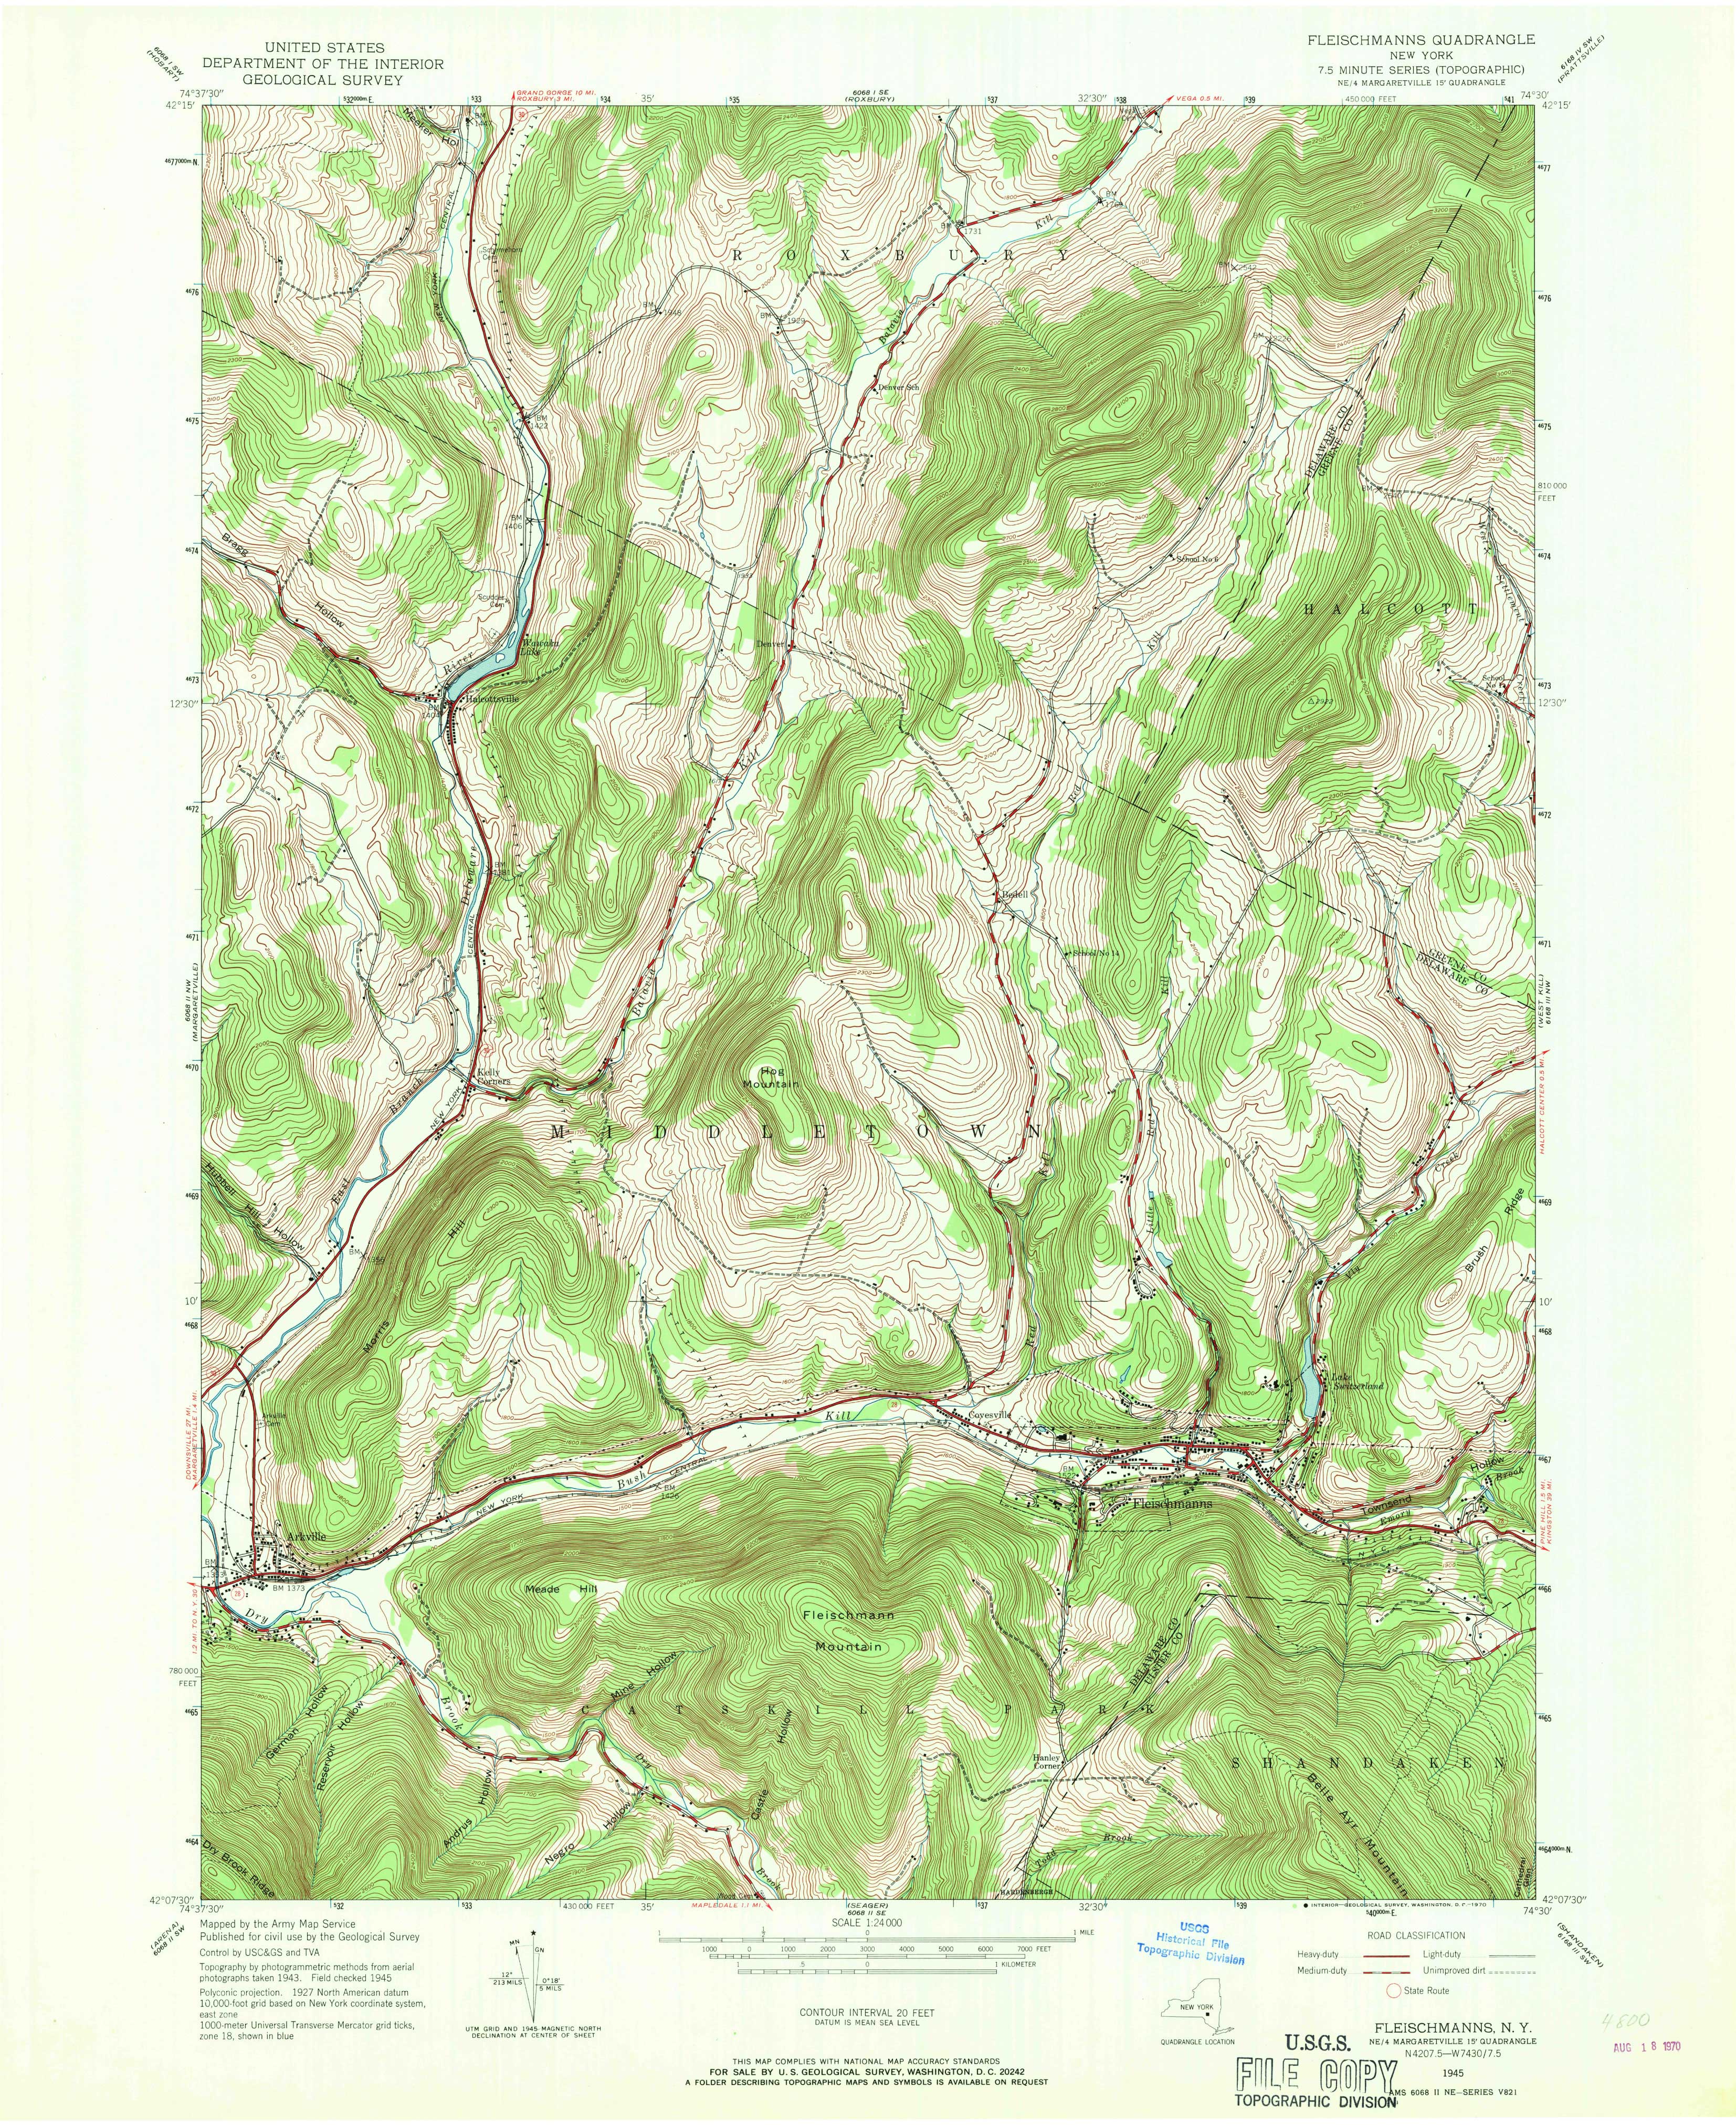 1945 USGS topographical map of Fleischmanns